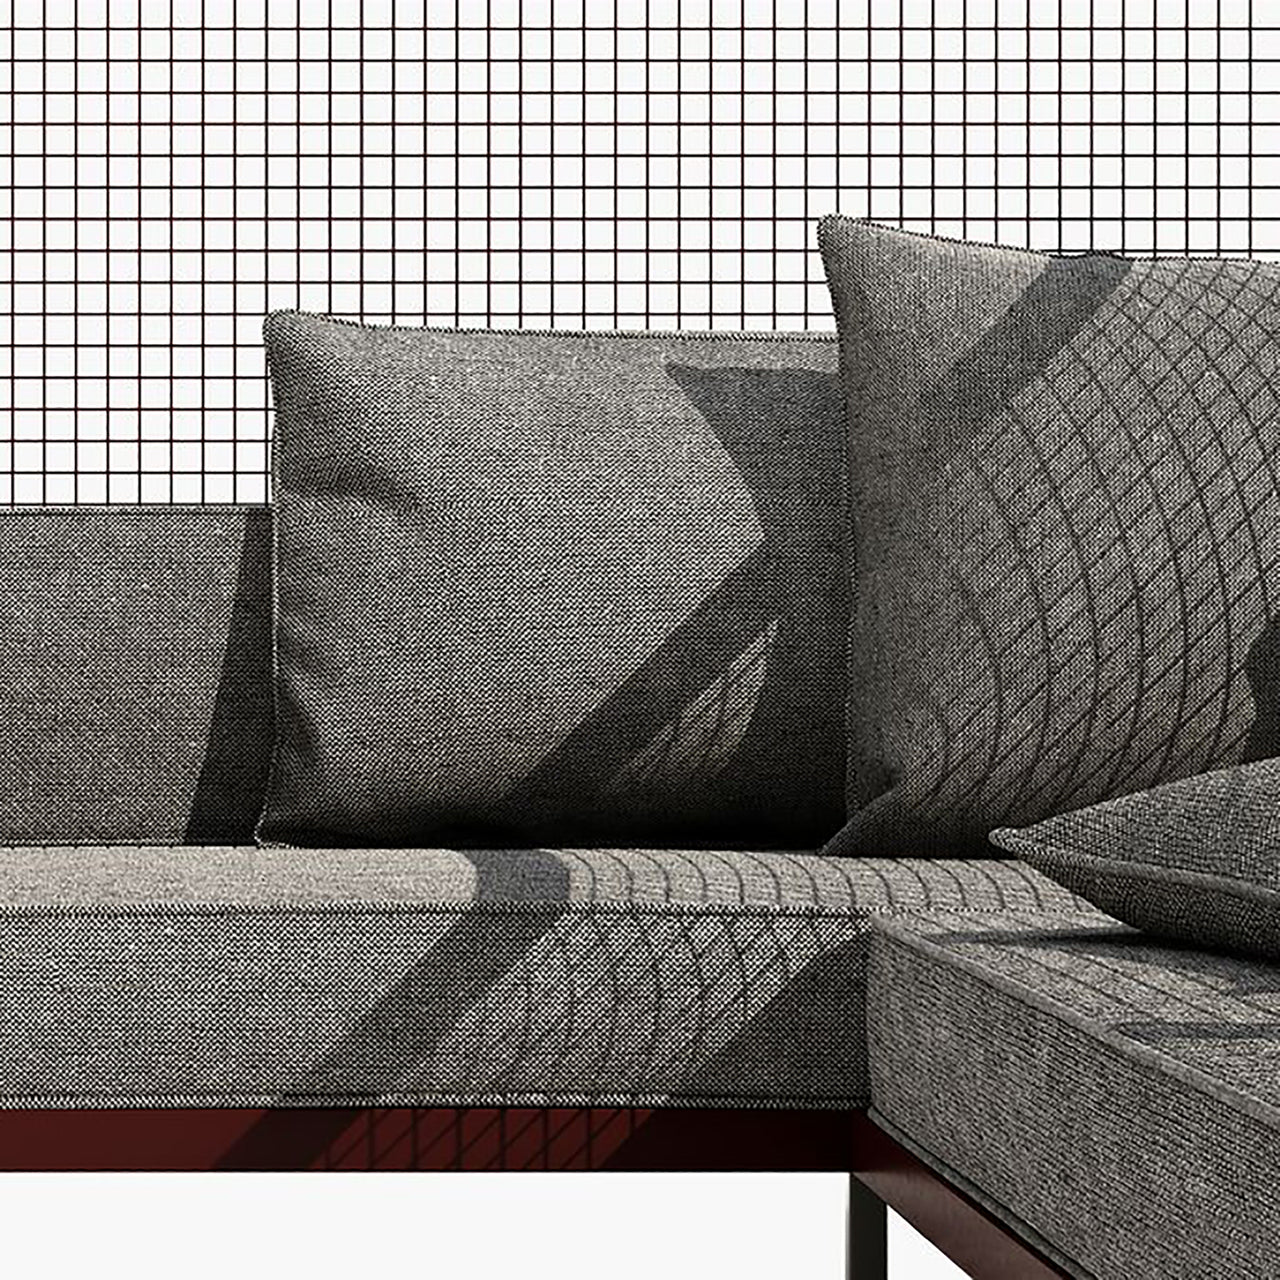 Grid Corner Sofa: Upholstered